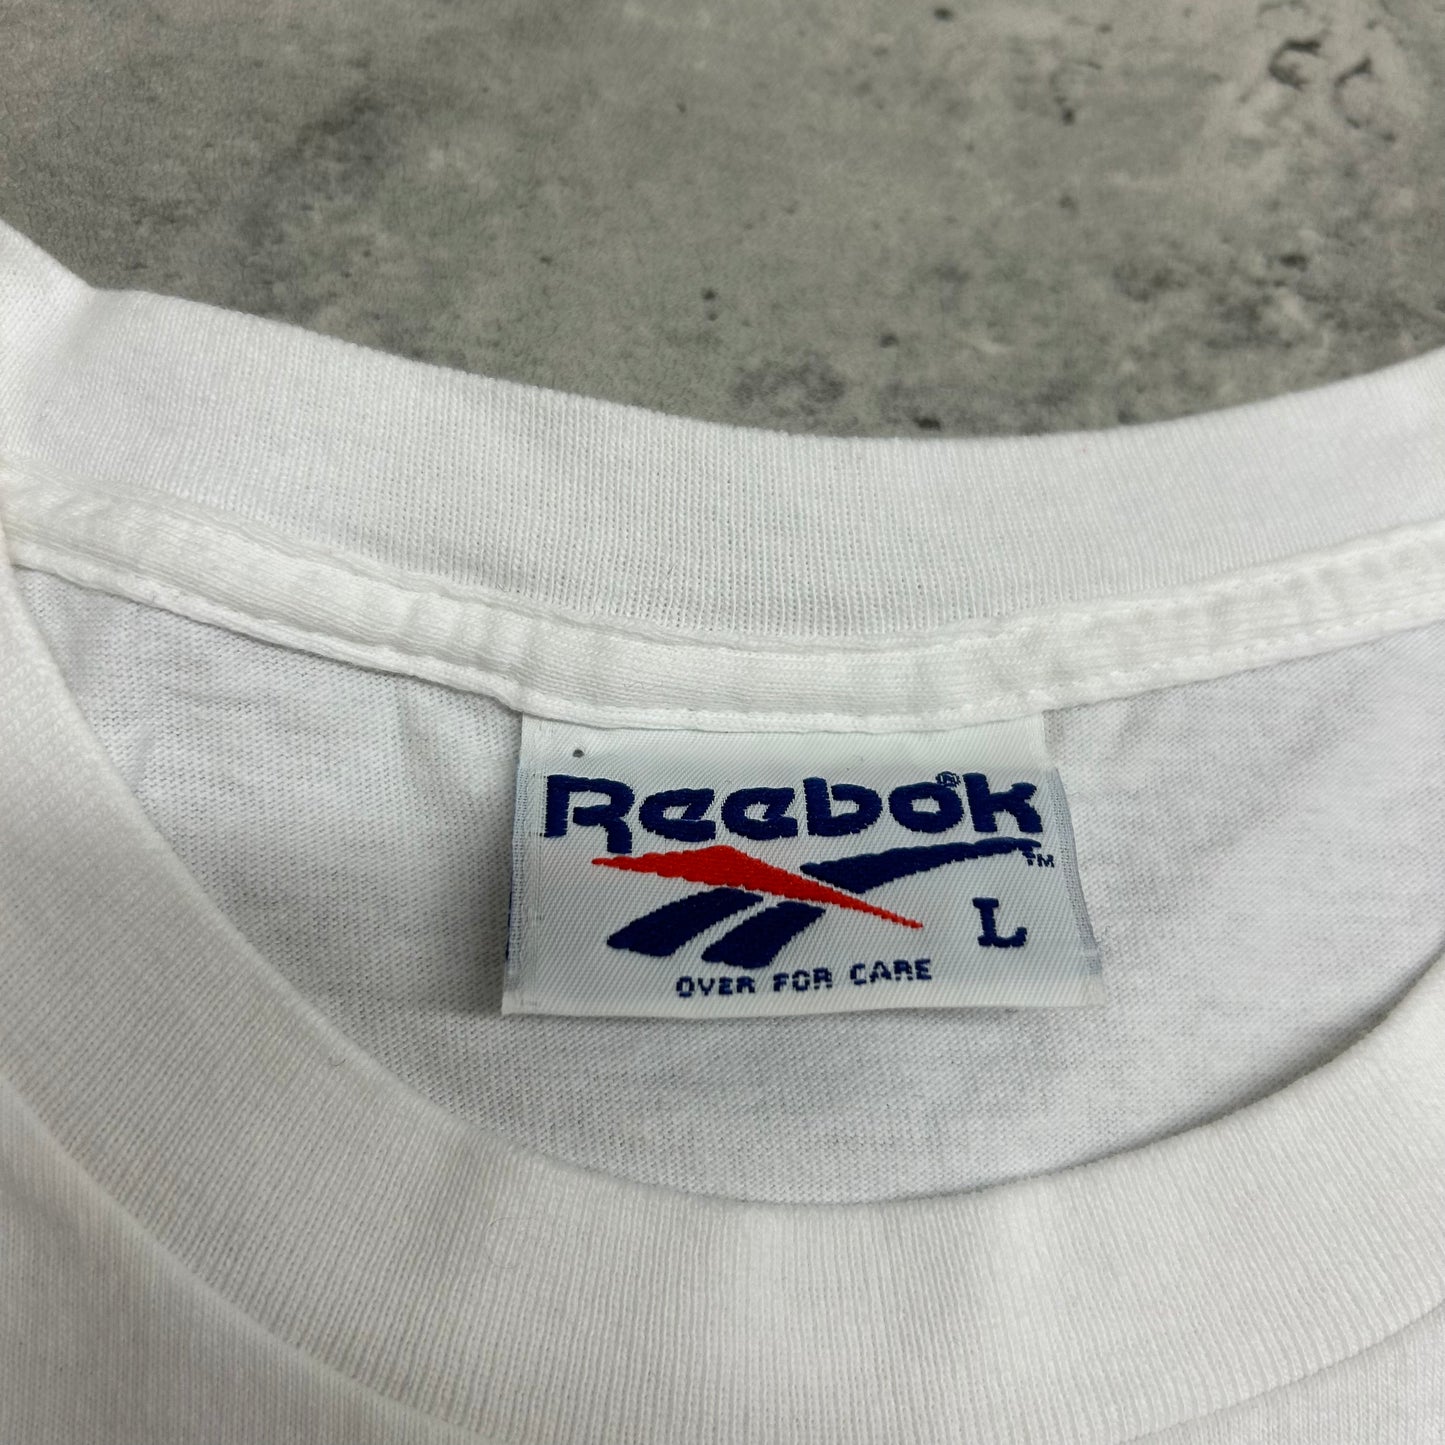 90's Reebok "No Thanks, I'll Walk" Shirt size L